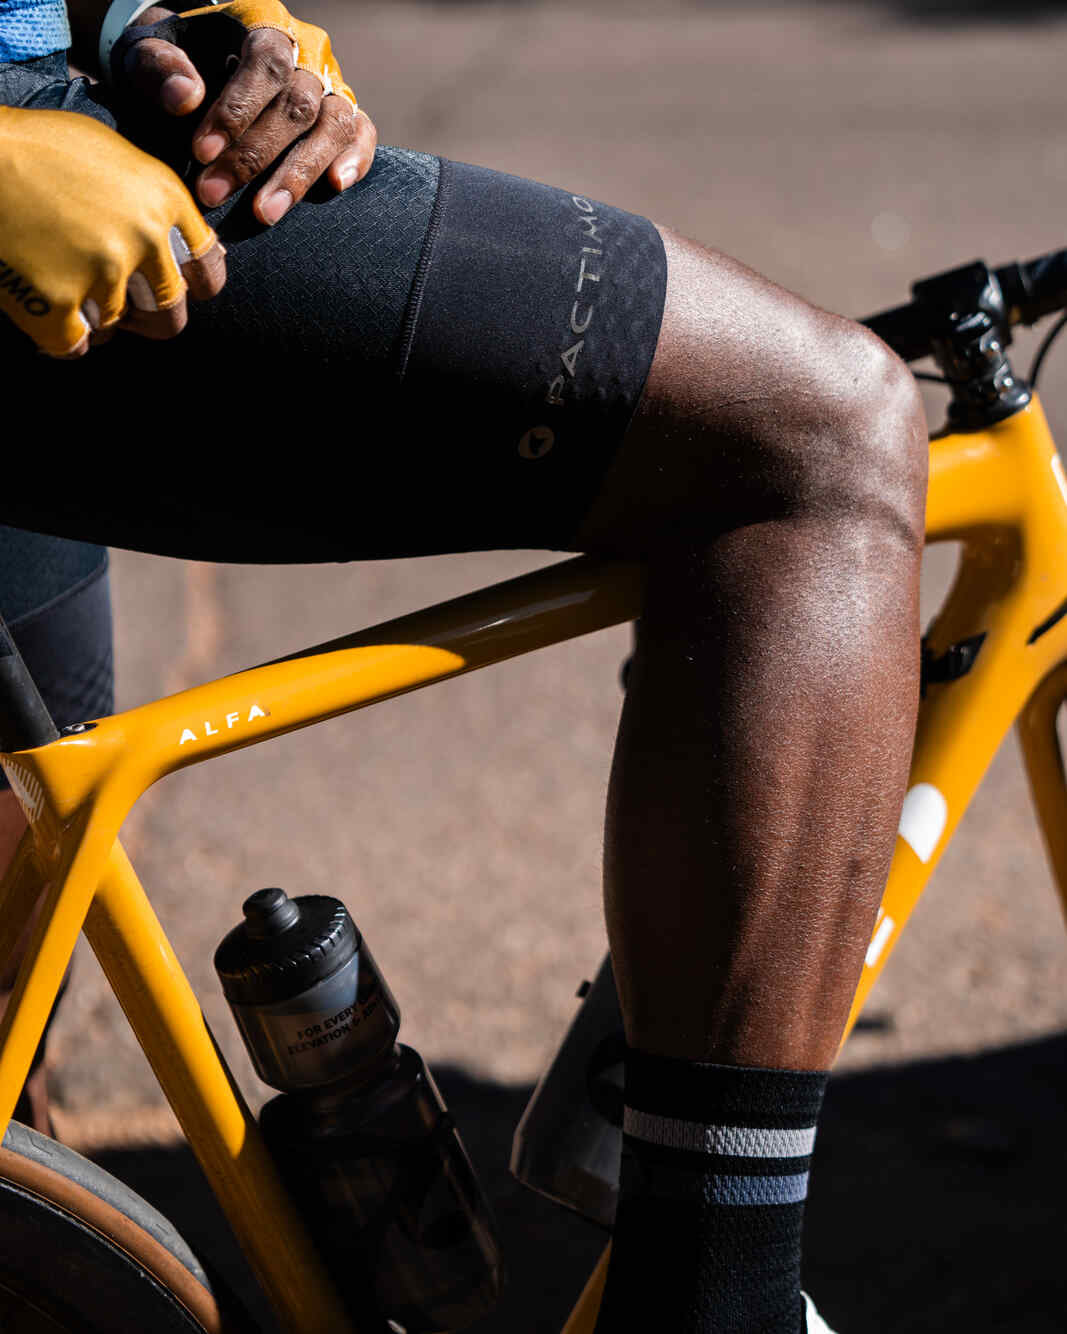 Men's Summit Raptor Cycling Bibs - On Cyclists Leg